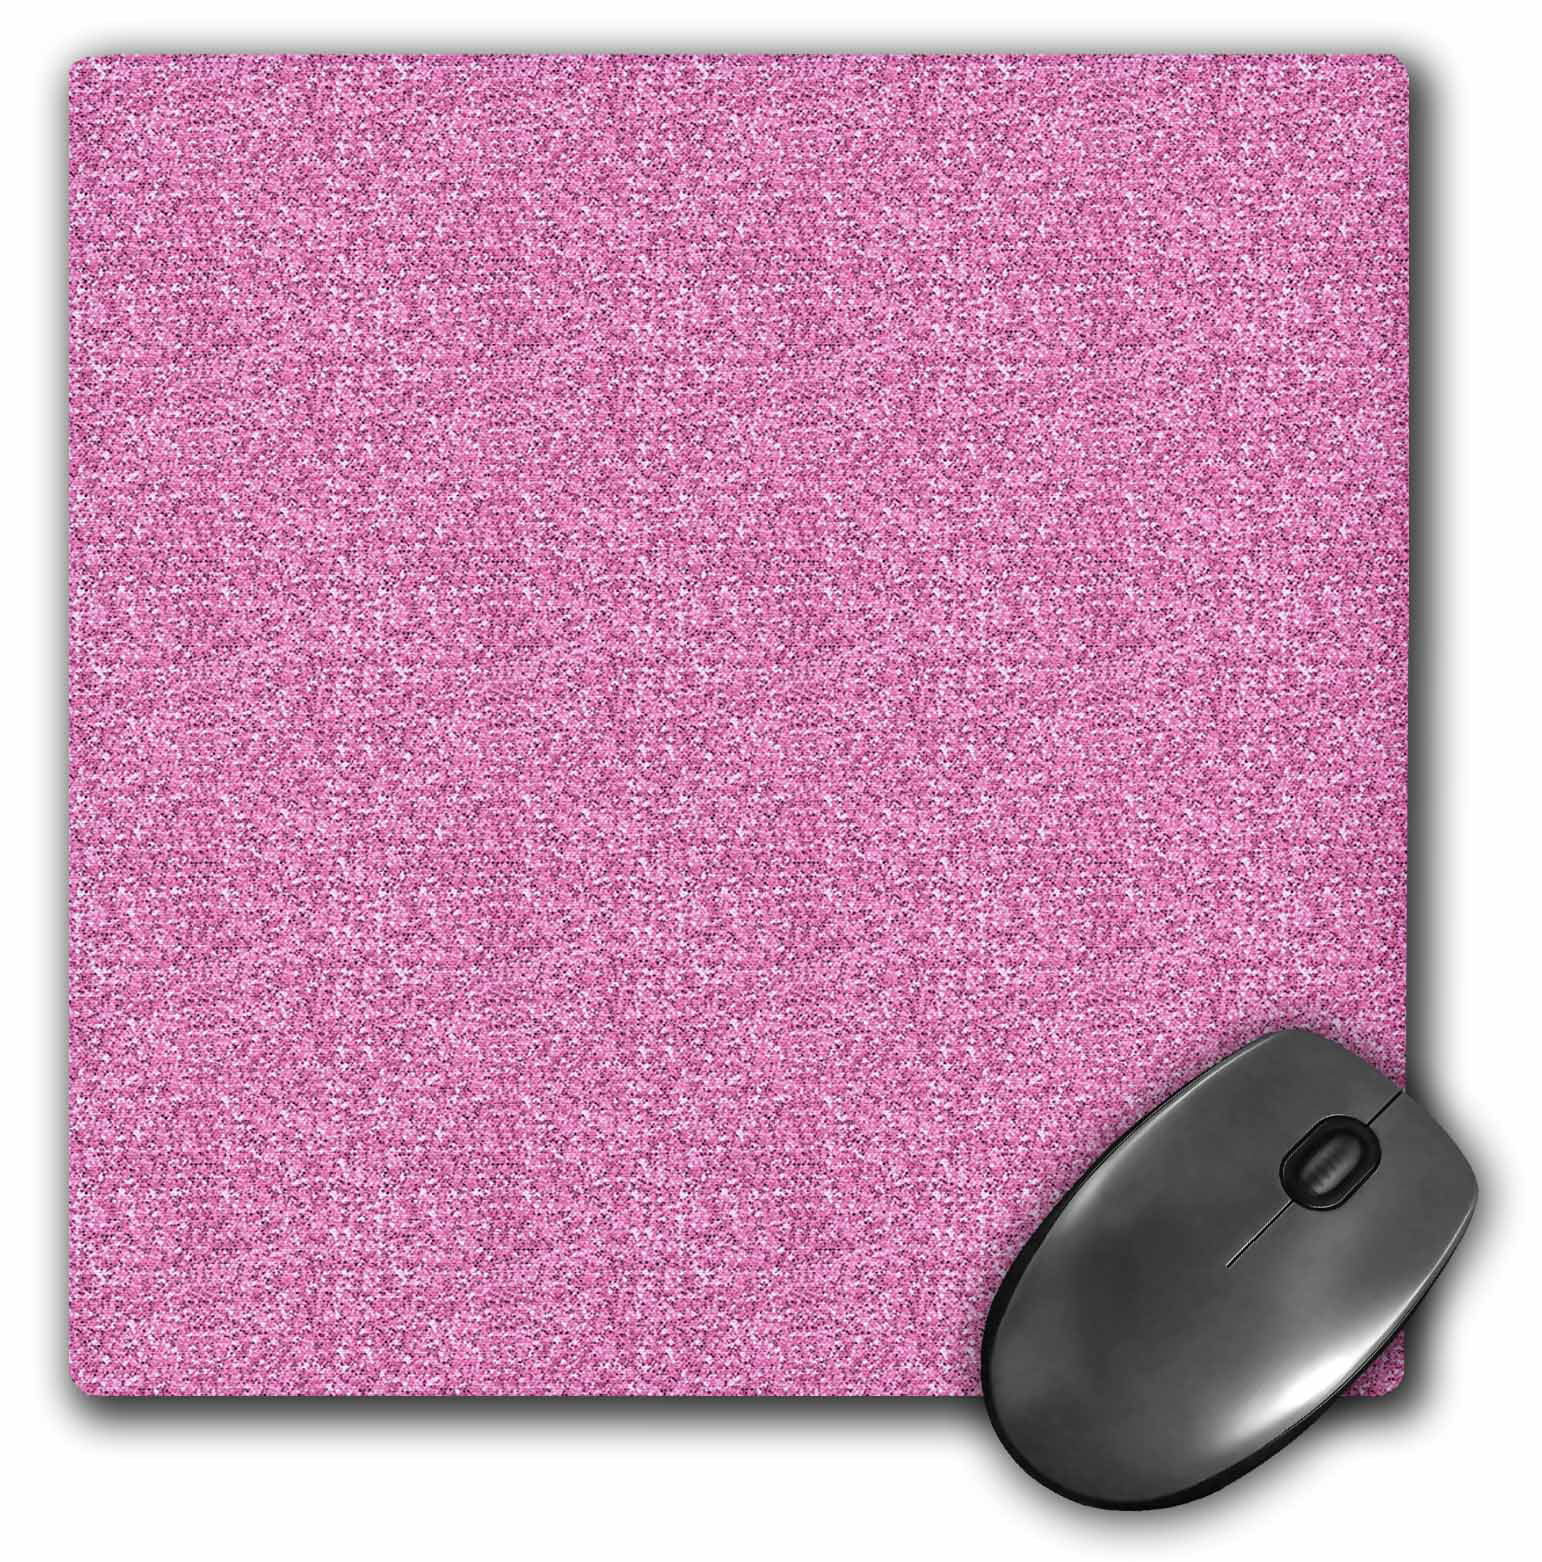 Joseph Mouse Pad,Non-Slip Waterproof Rubber Base Mousepad for Laptop-Glitter Black Makeup Eye Lashes Pink Rose Gold